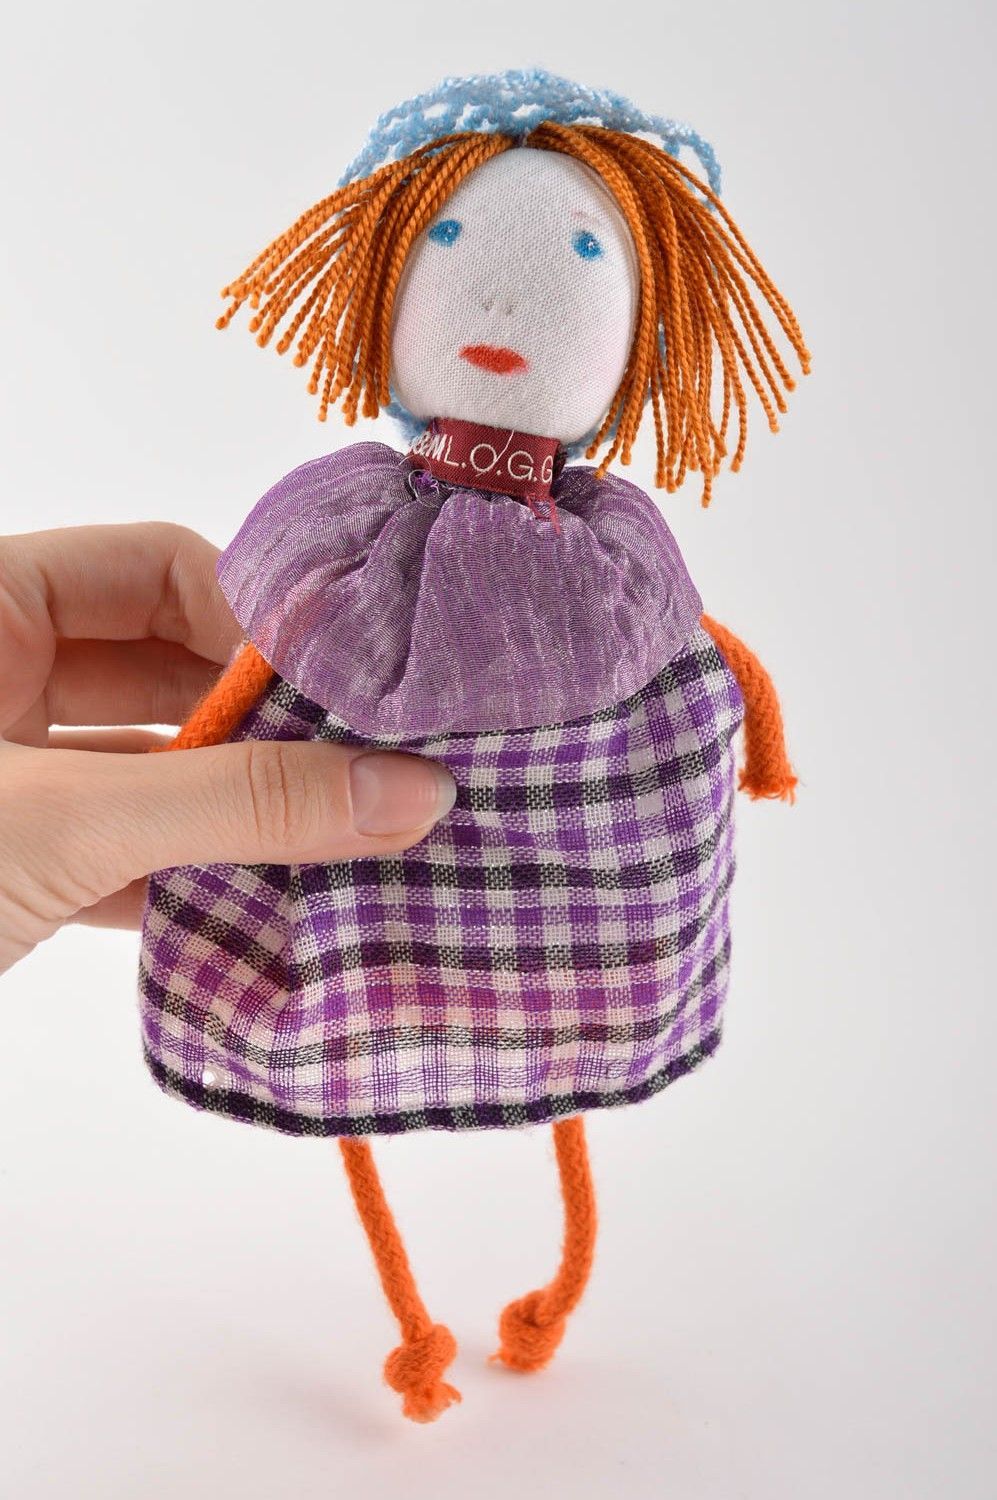 Beautiful handmade rag doll best toys for kids interior design styles gift ideas photo 5